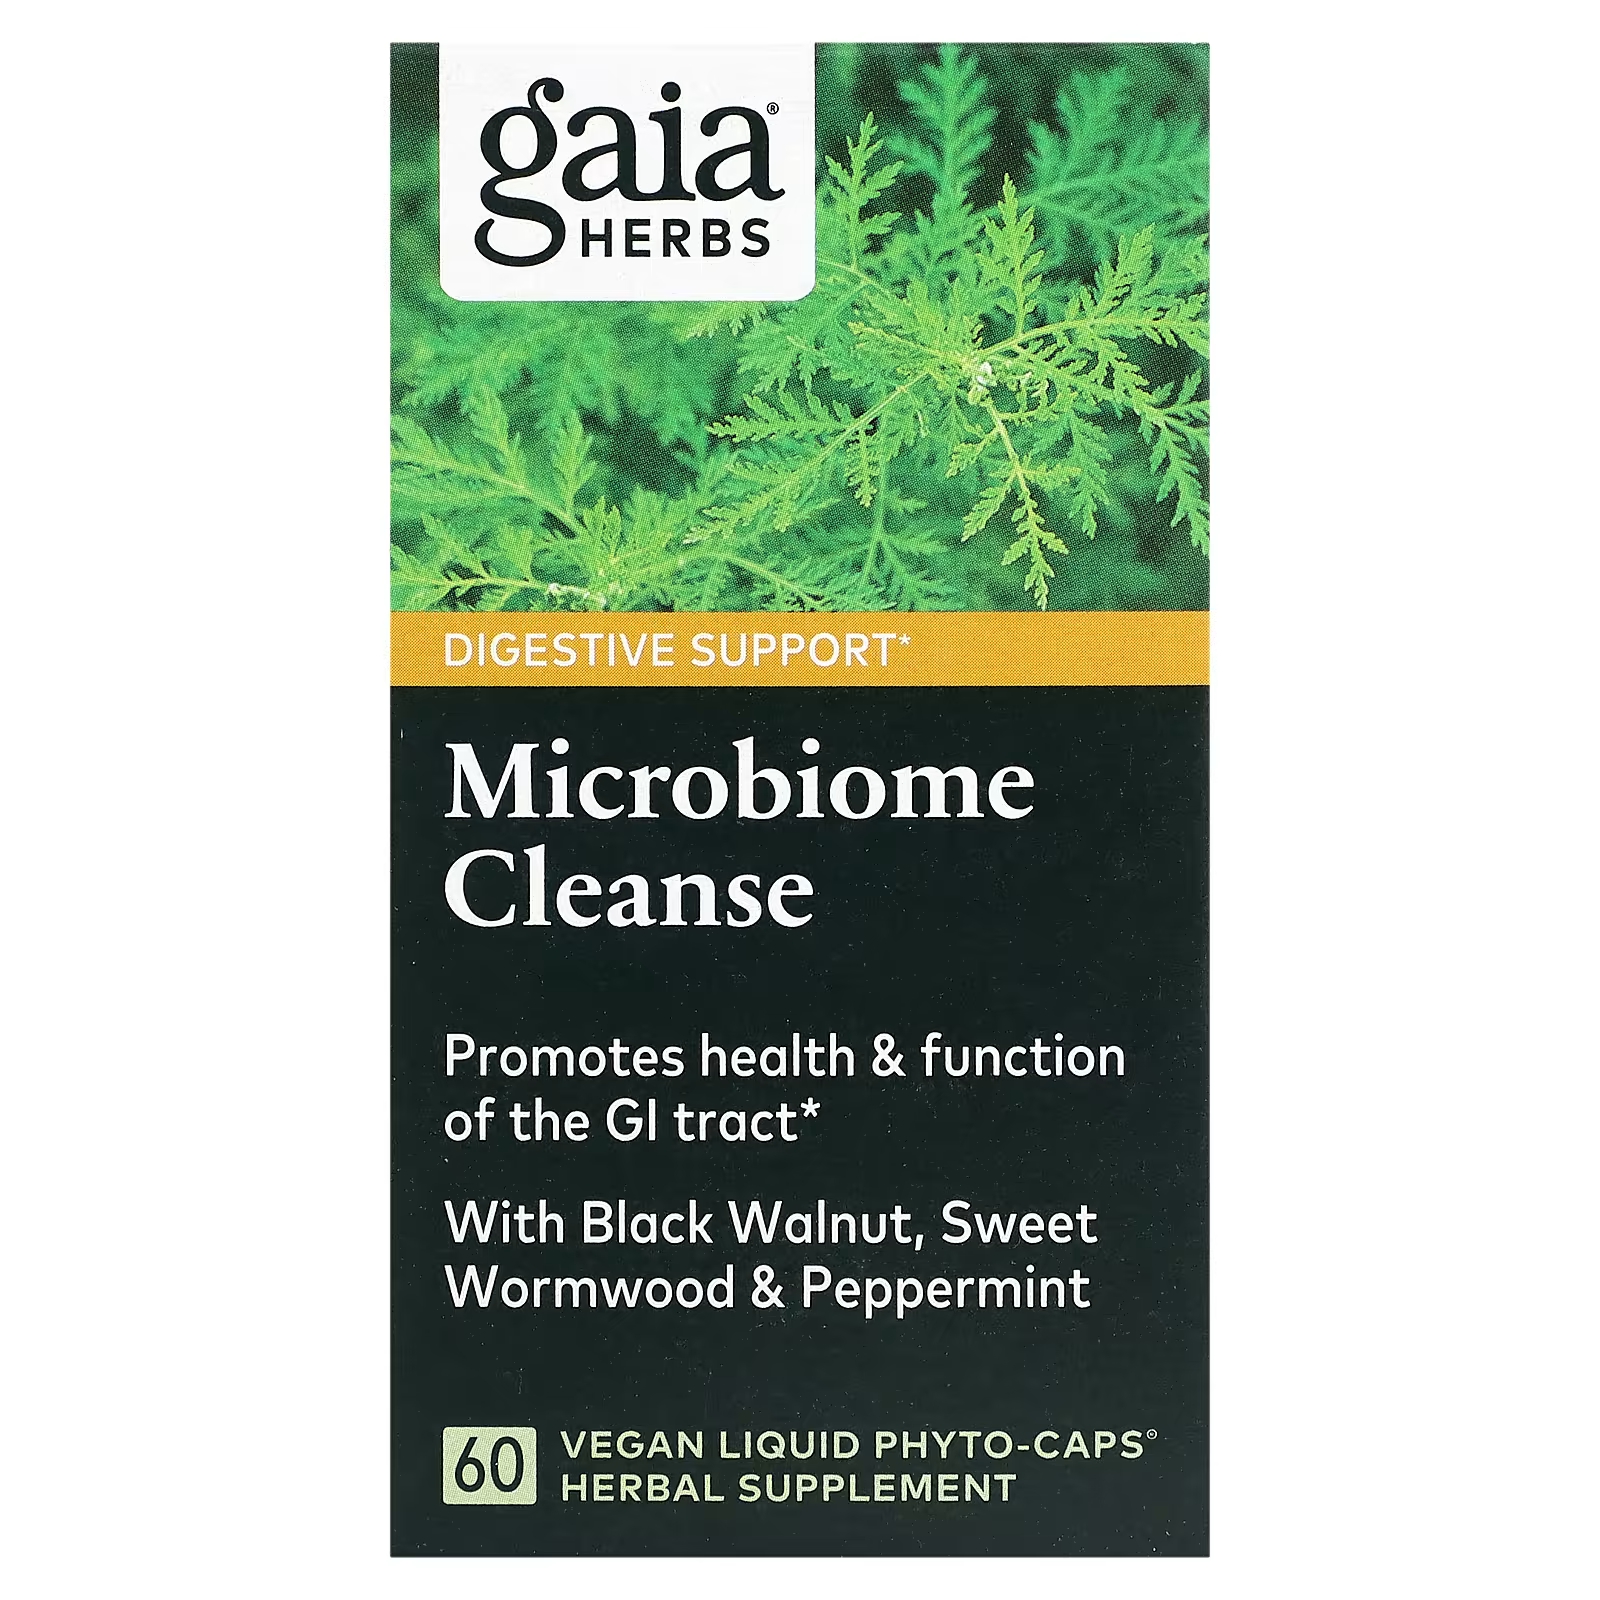 Растительная добавка Gaia Herbs Microbiome Cleanse, 60 жидких фитокапсул